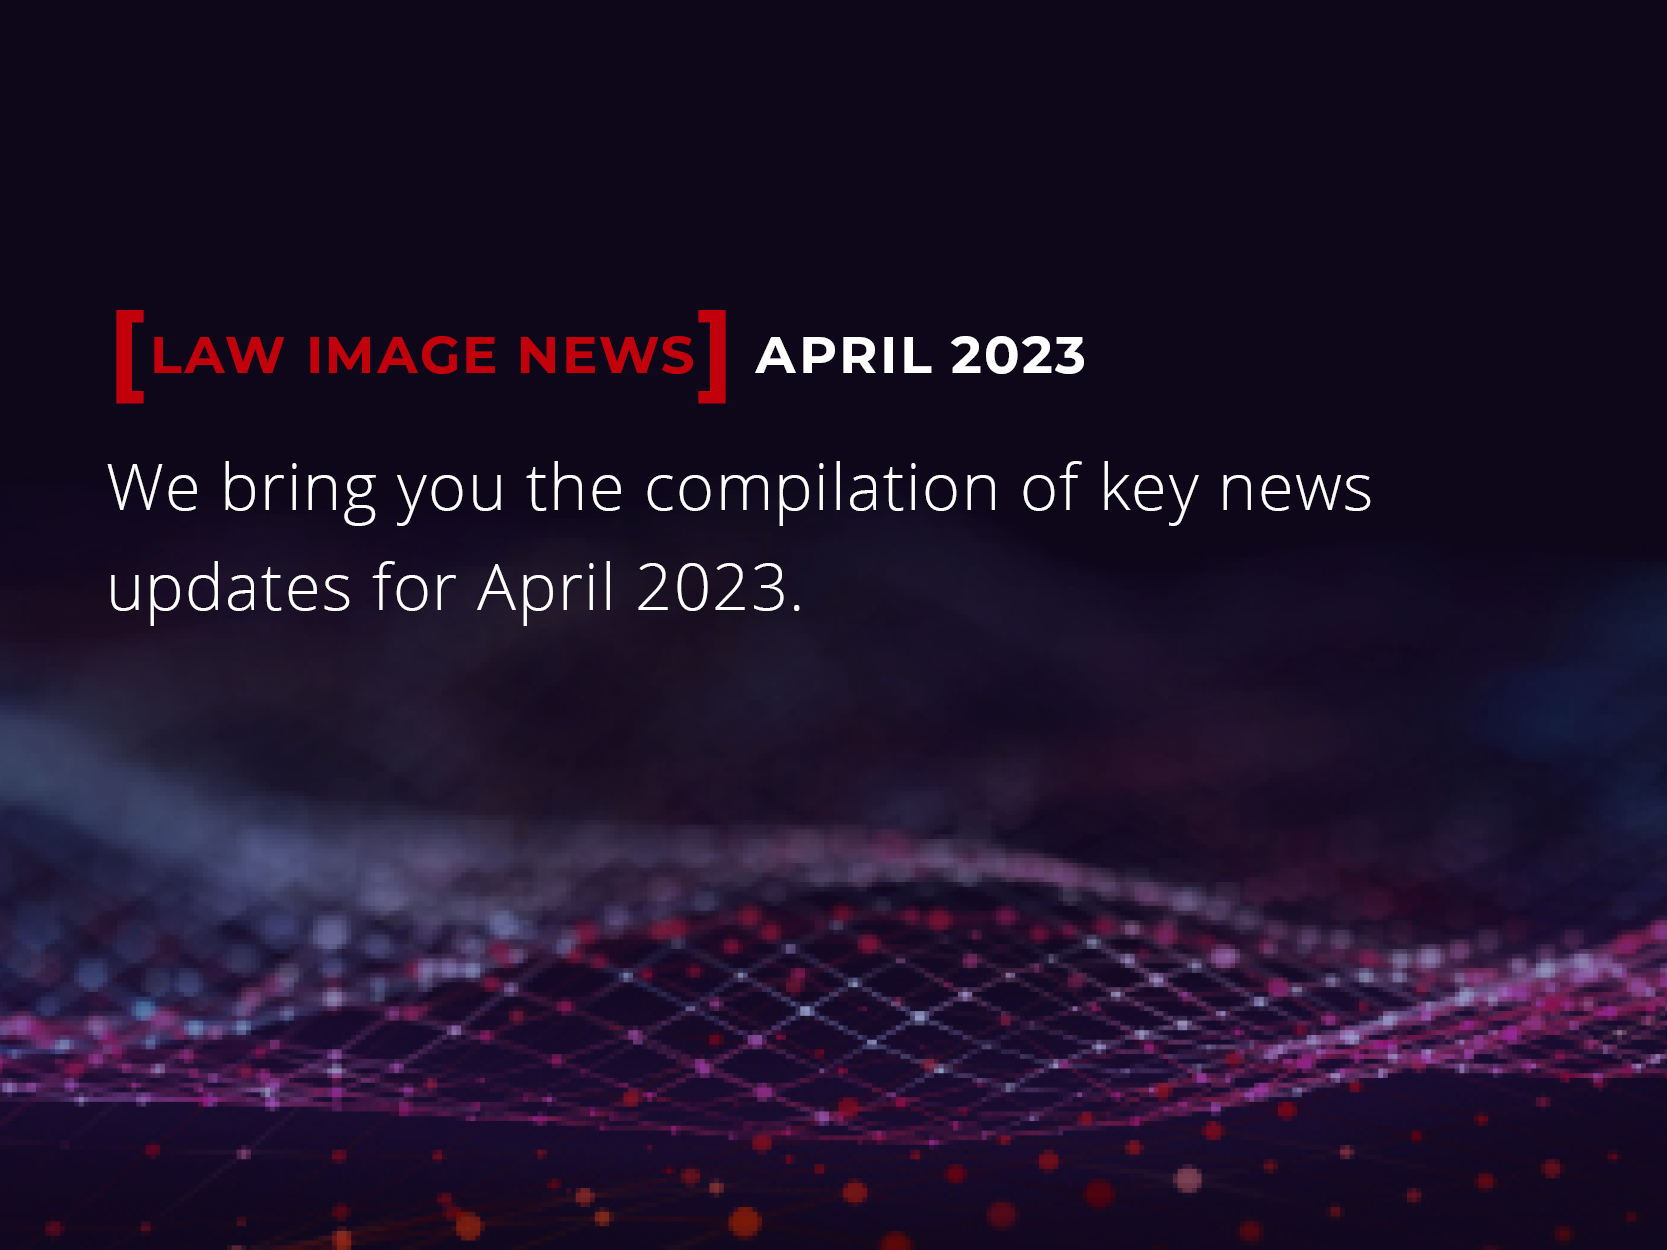 Key updates April 2023